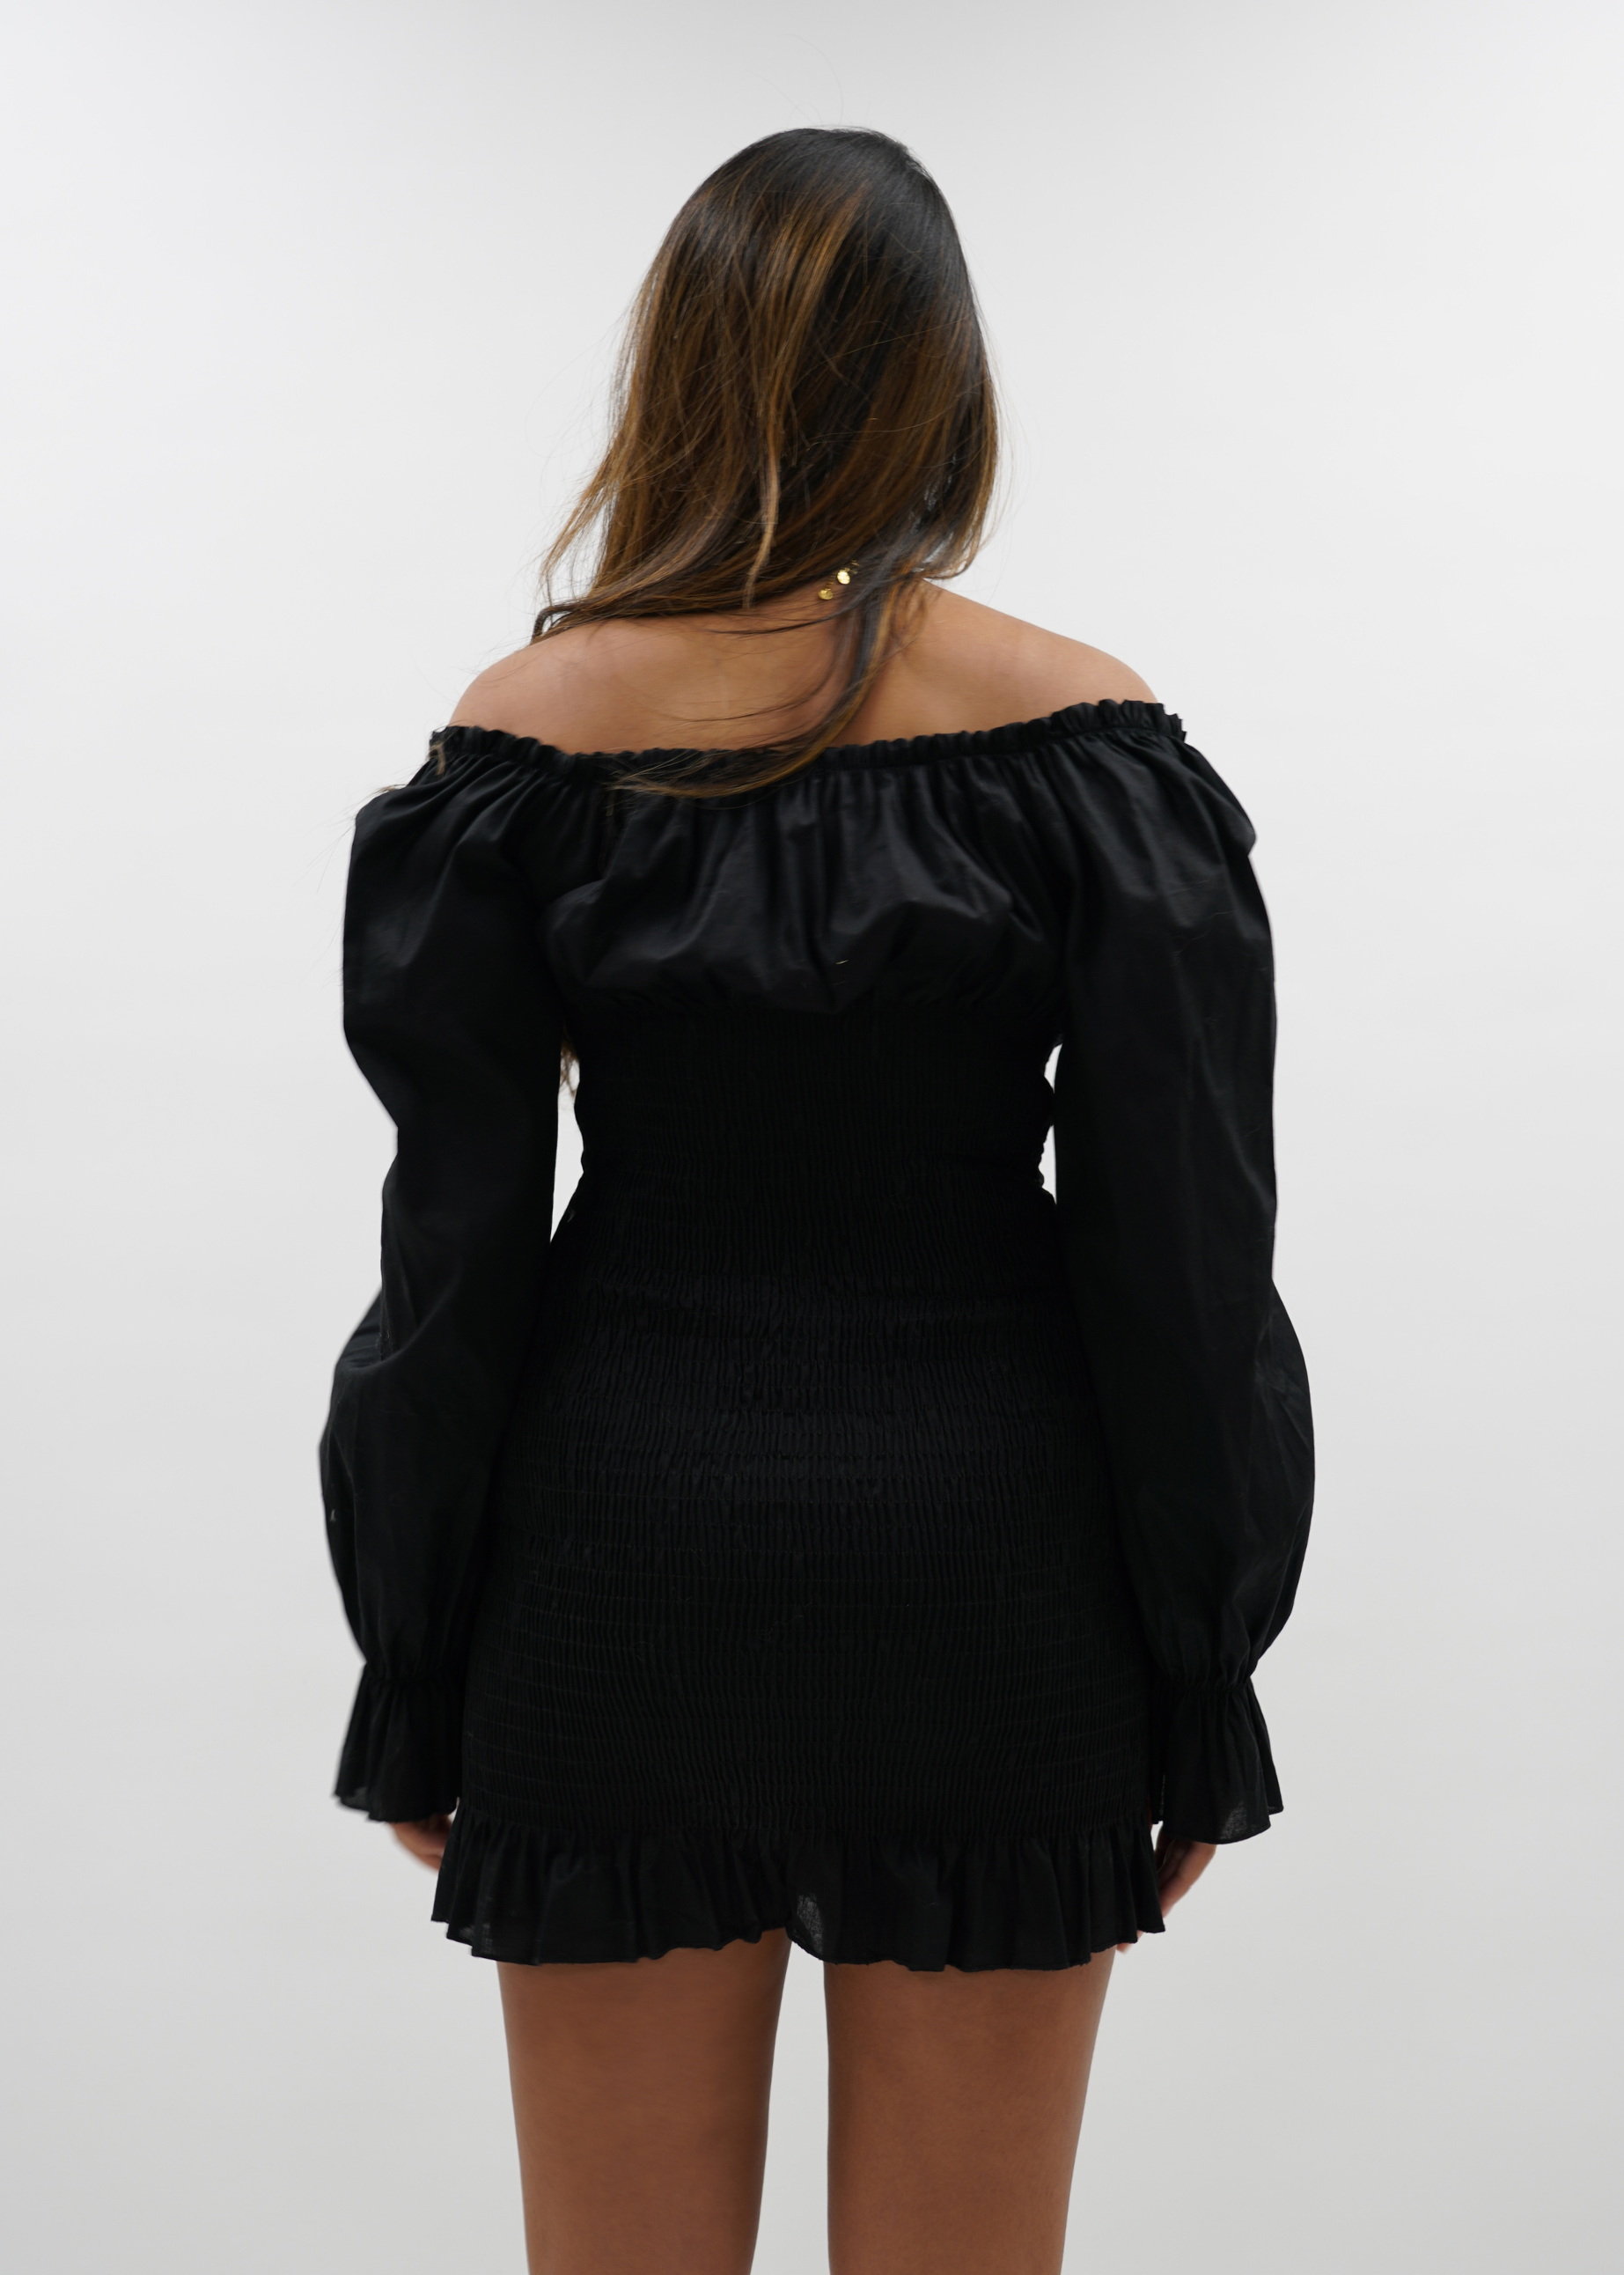 Mauré dress black